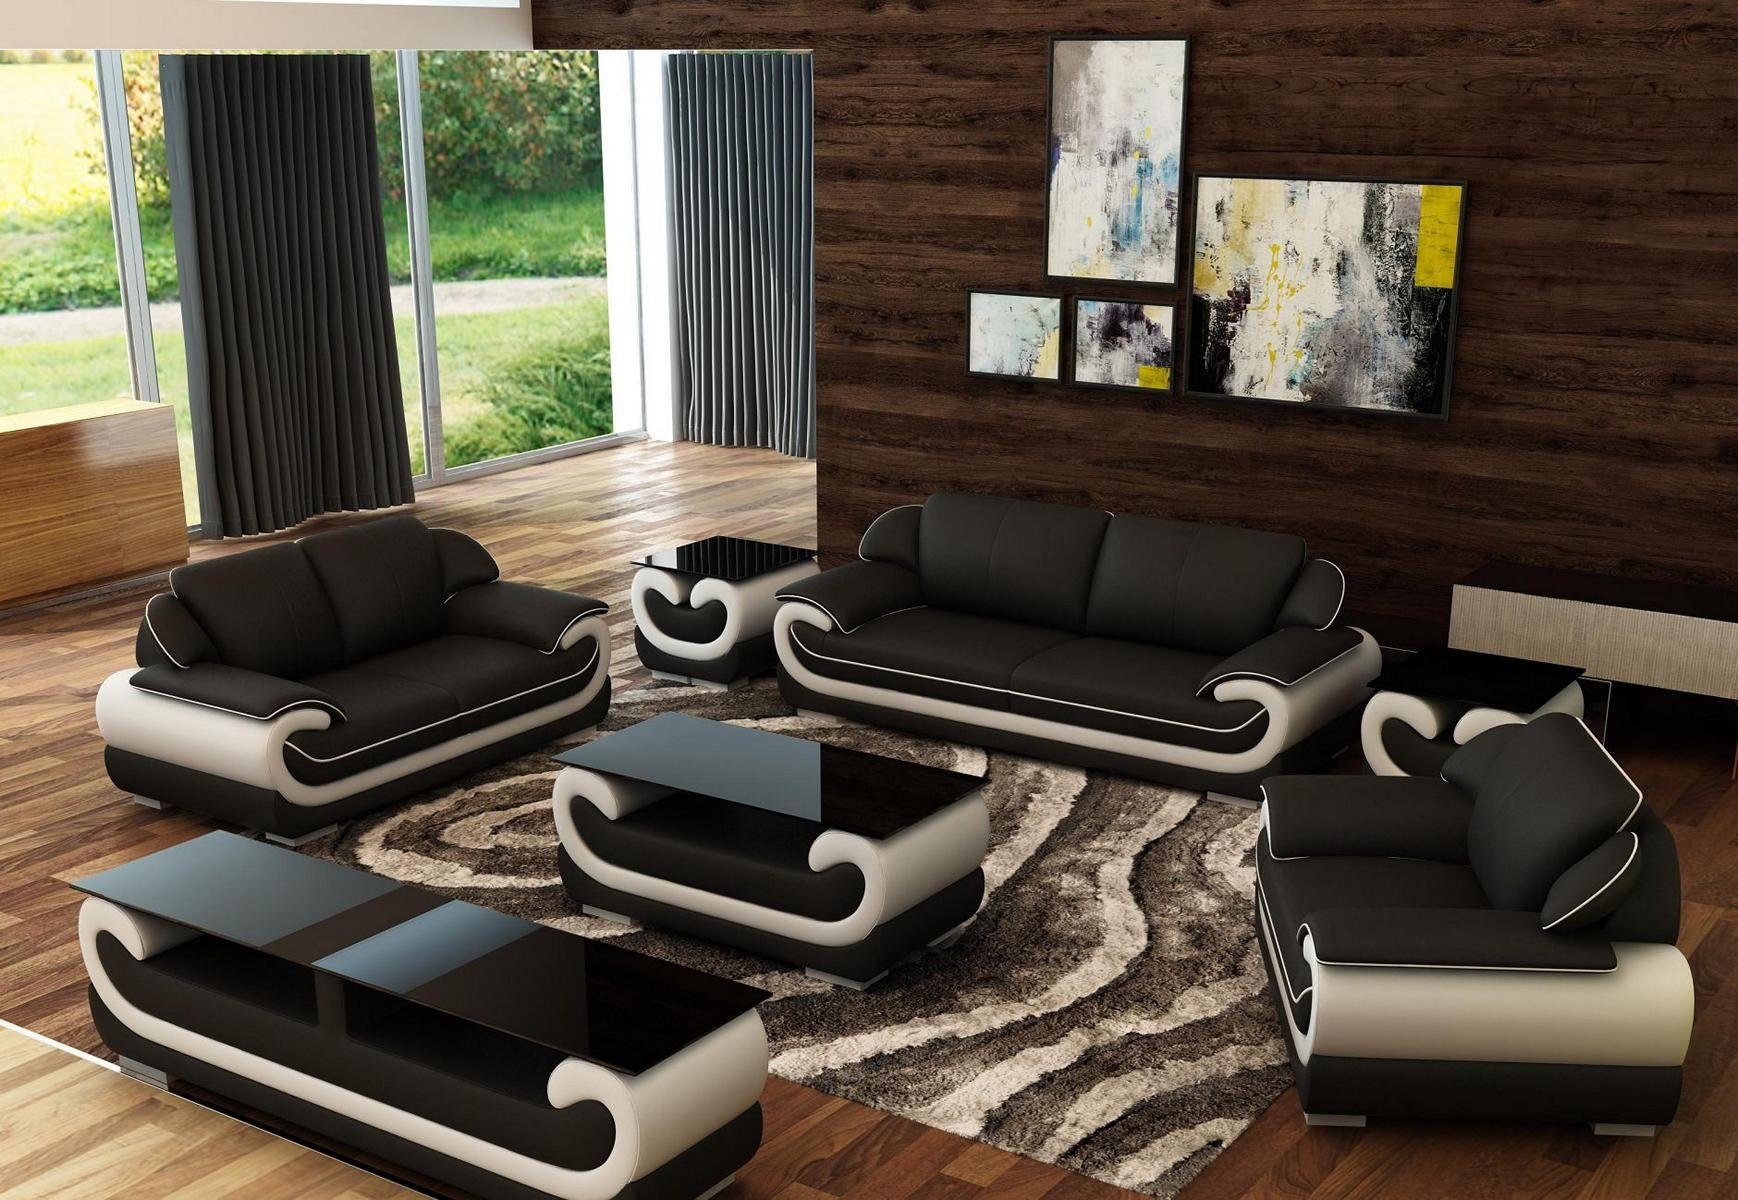 Couch in 3+2 Ledersofa Made jvmoebel, Schwarz/Beige Sofa Sitzer Europe Wohnlandschaft JVmoebel Modern Design Sofa